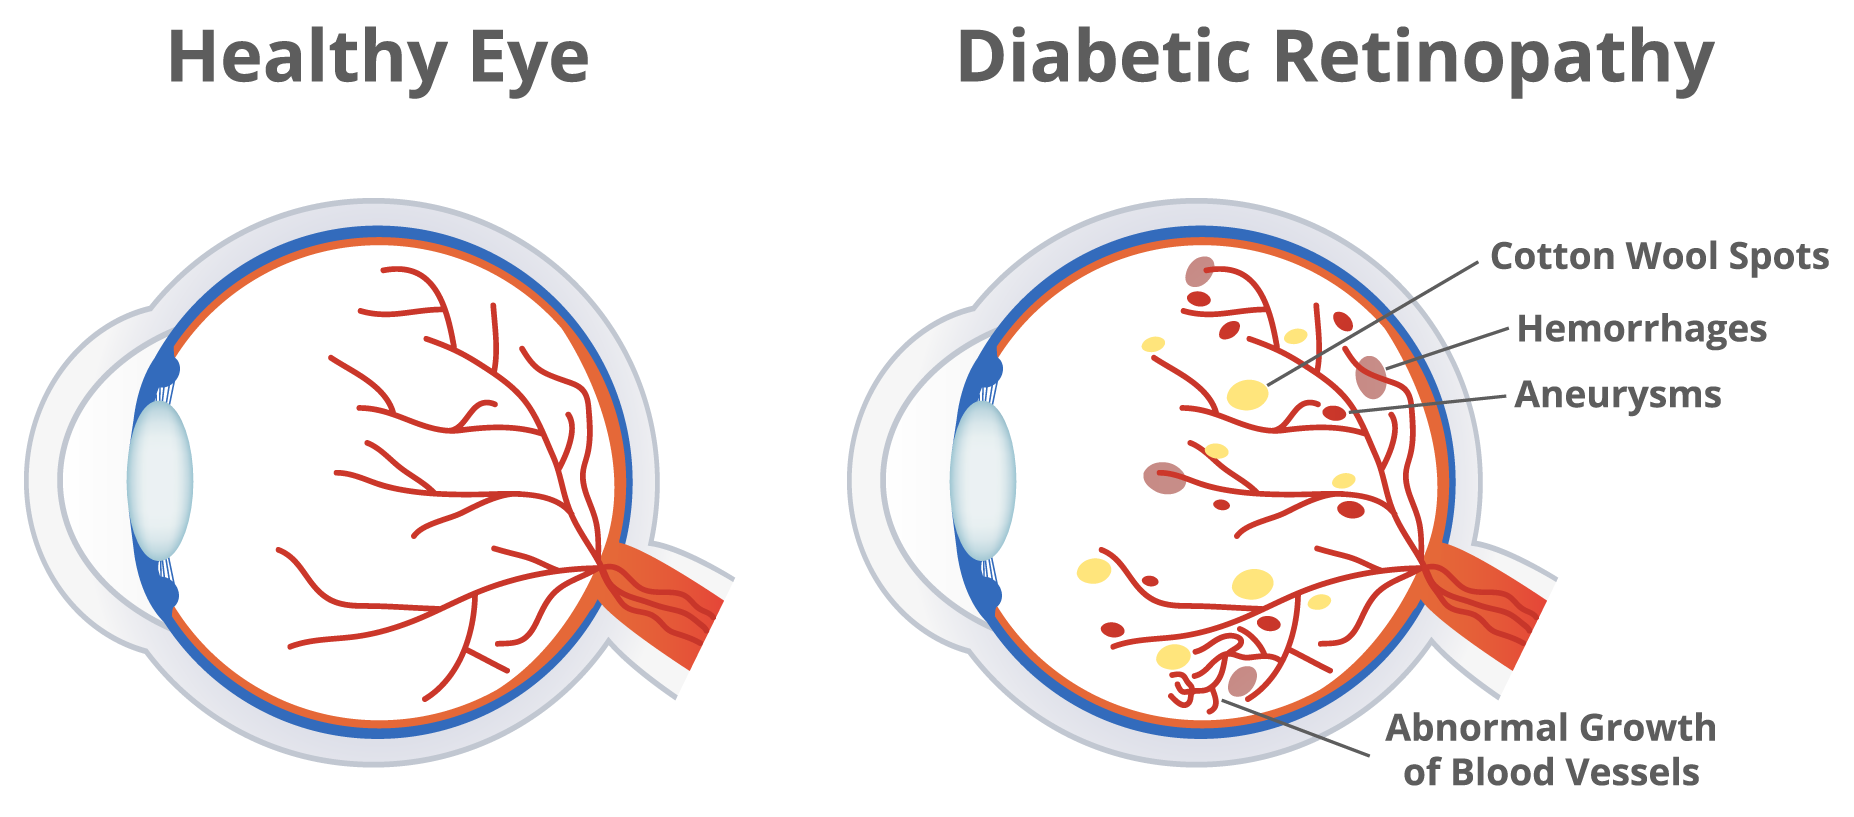 Medical illustration of healthy eye vs. eye with diabetic retinopathy